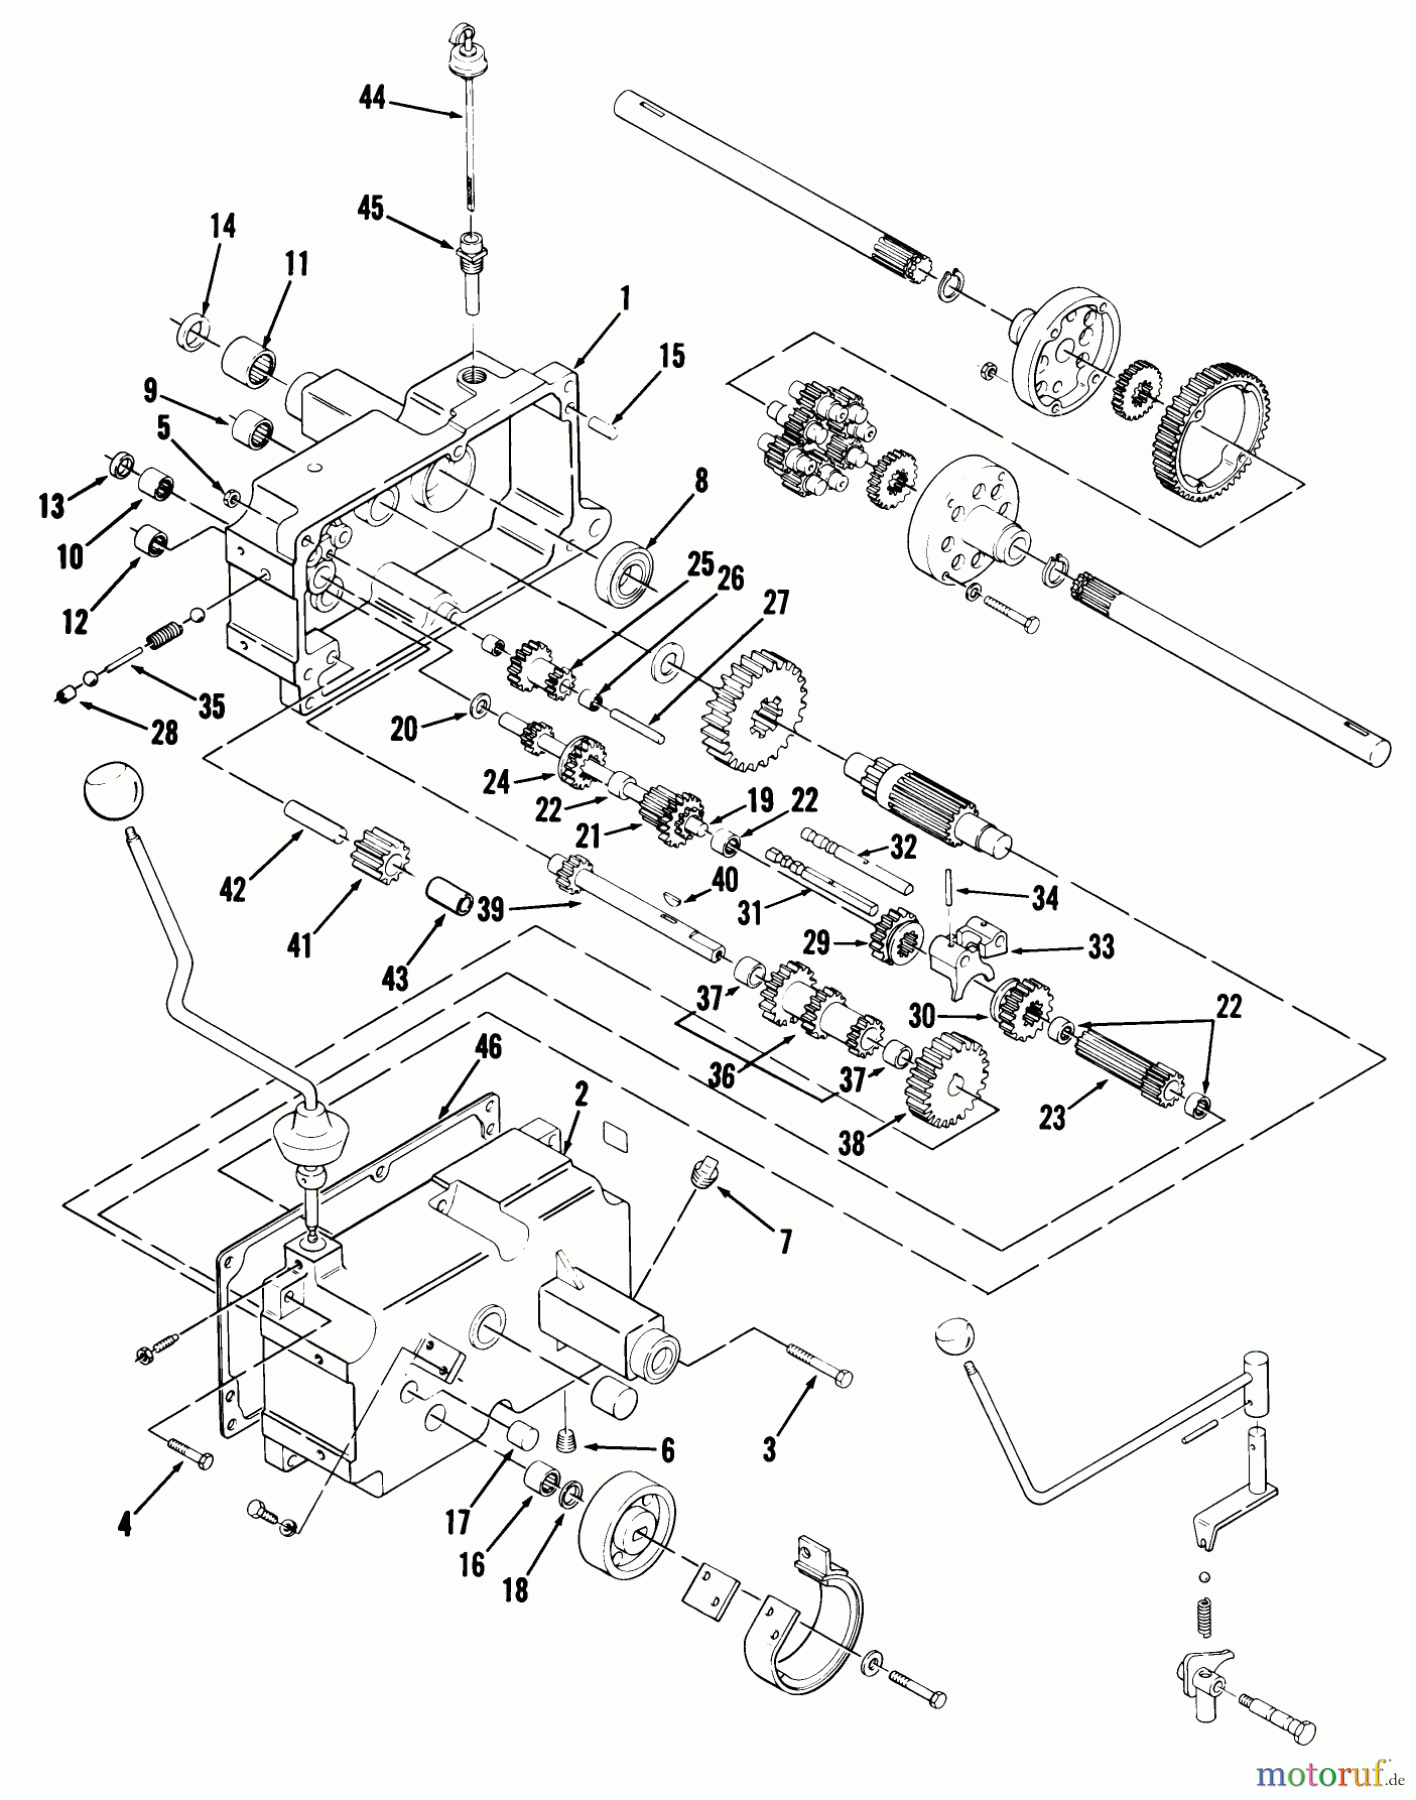  Toro Neu Mowers, Lawn & Garden Tractor Seite 1 01-16KE01 (C-165) - Toro C-165 Automatic Tractor, 1980 MECHANICAL TRANSMISSION-8 SPEED #1